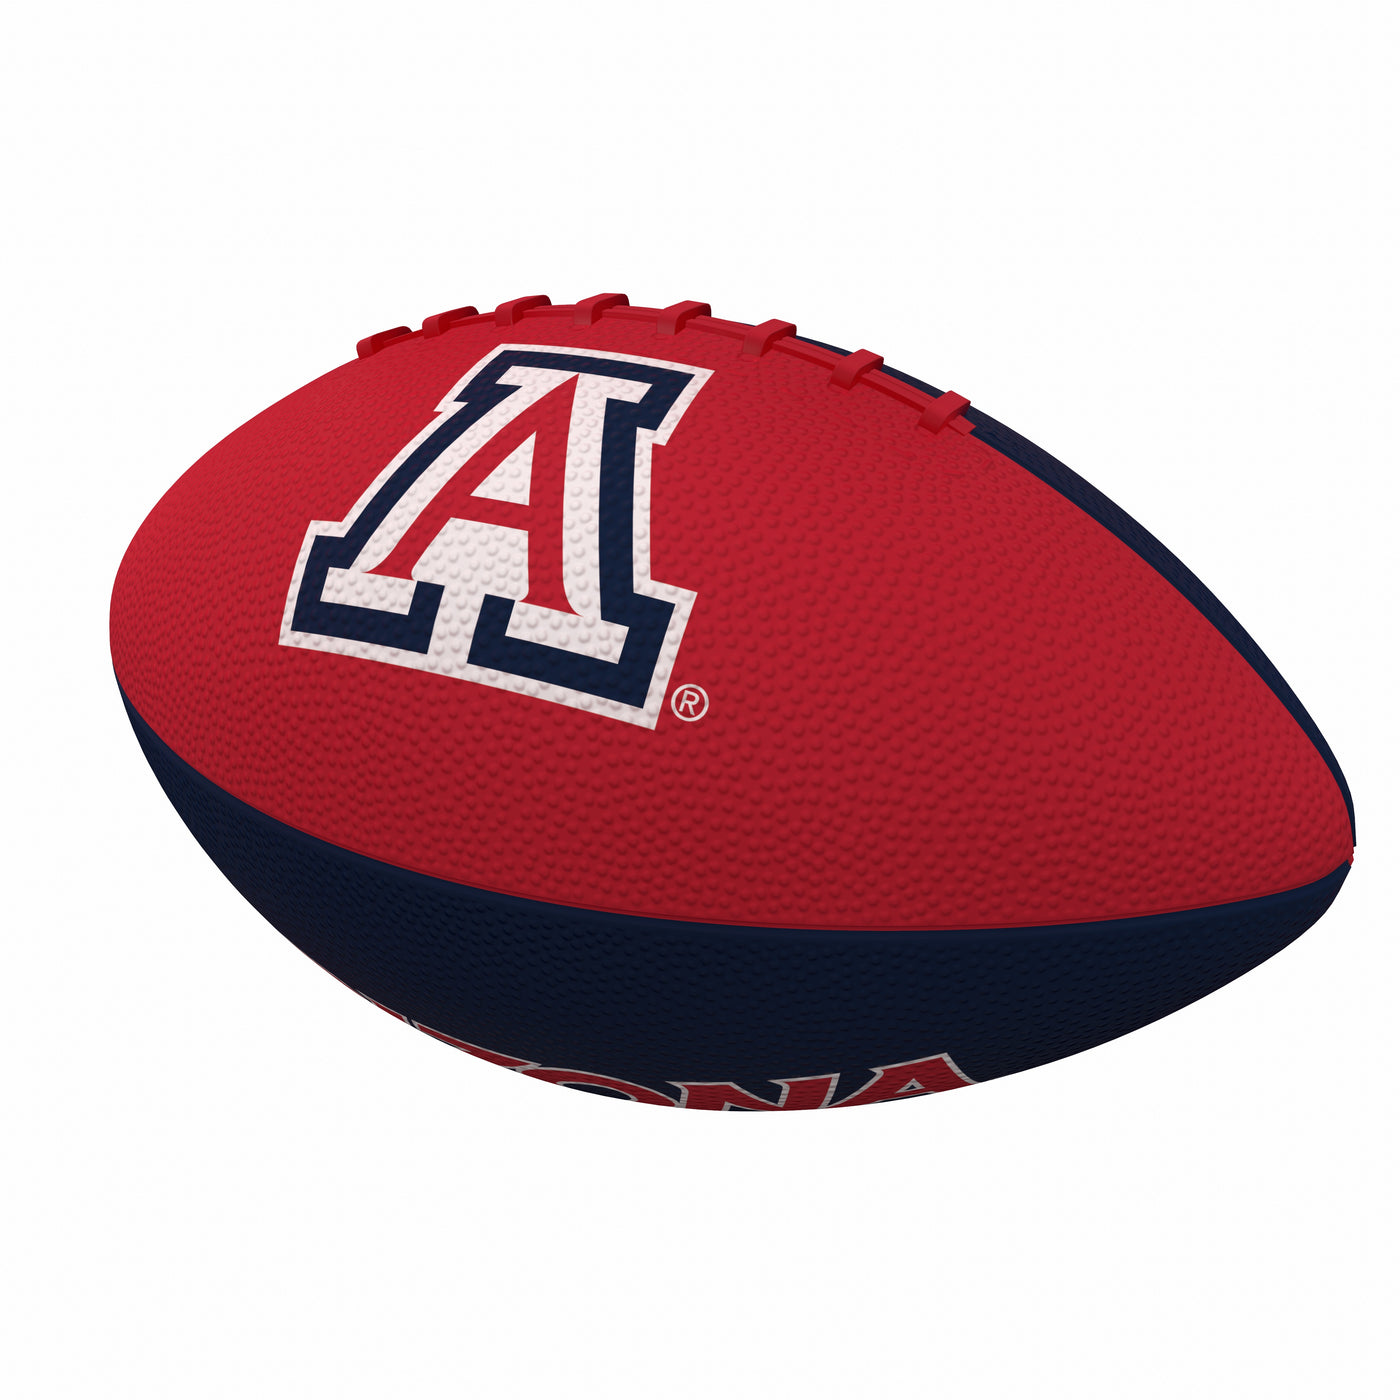 Arizona Pinwheel Junior Size Rubber Football